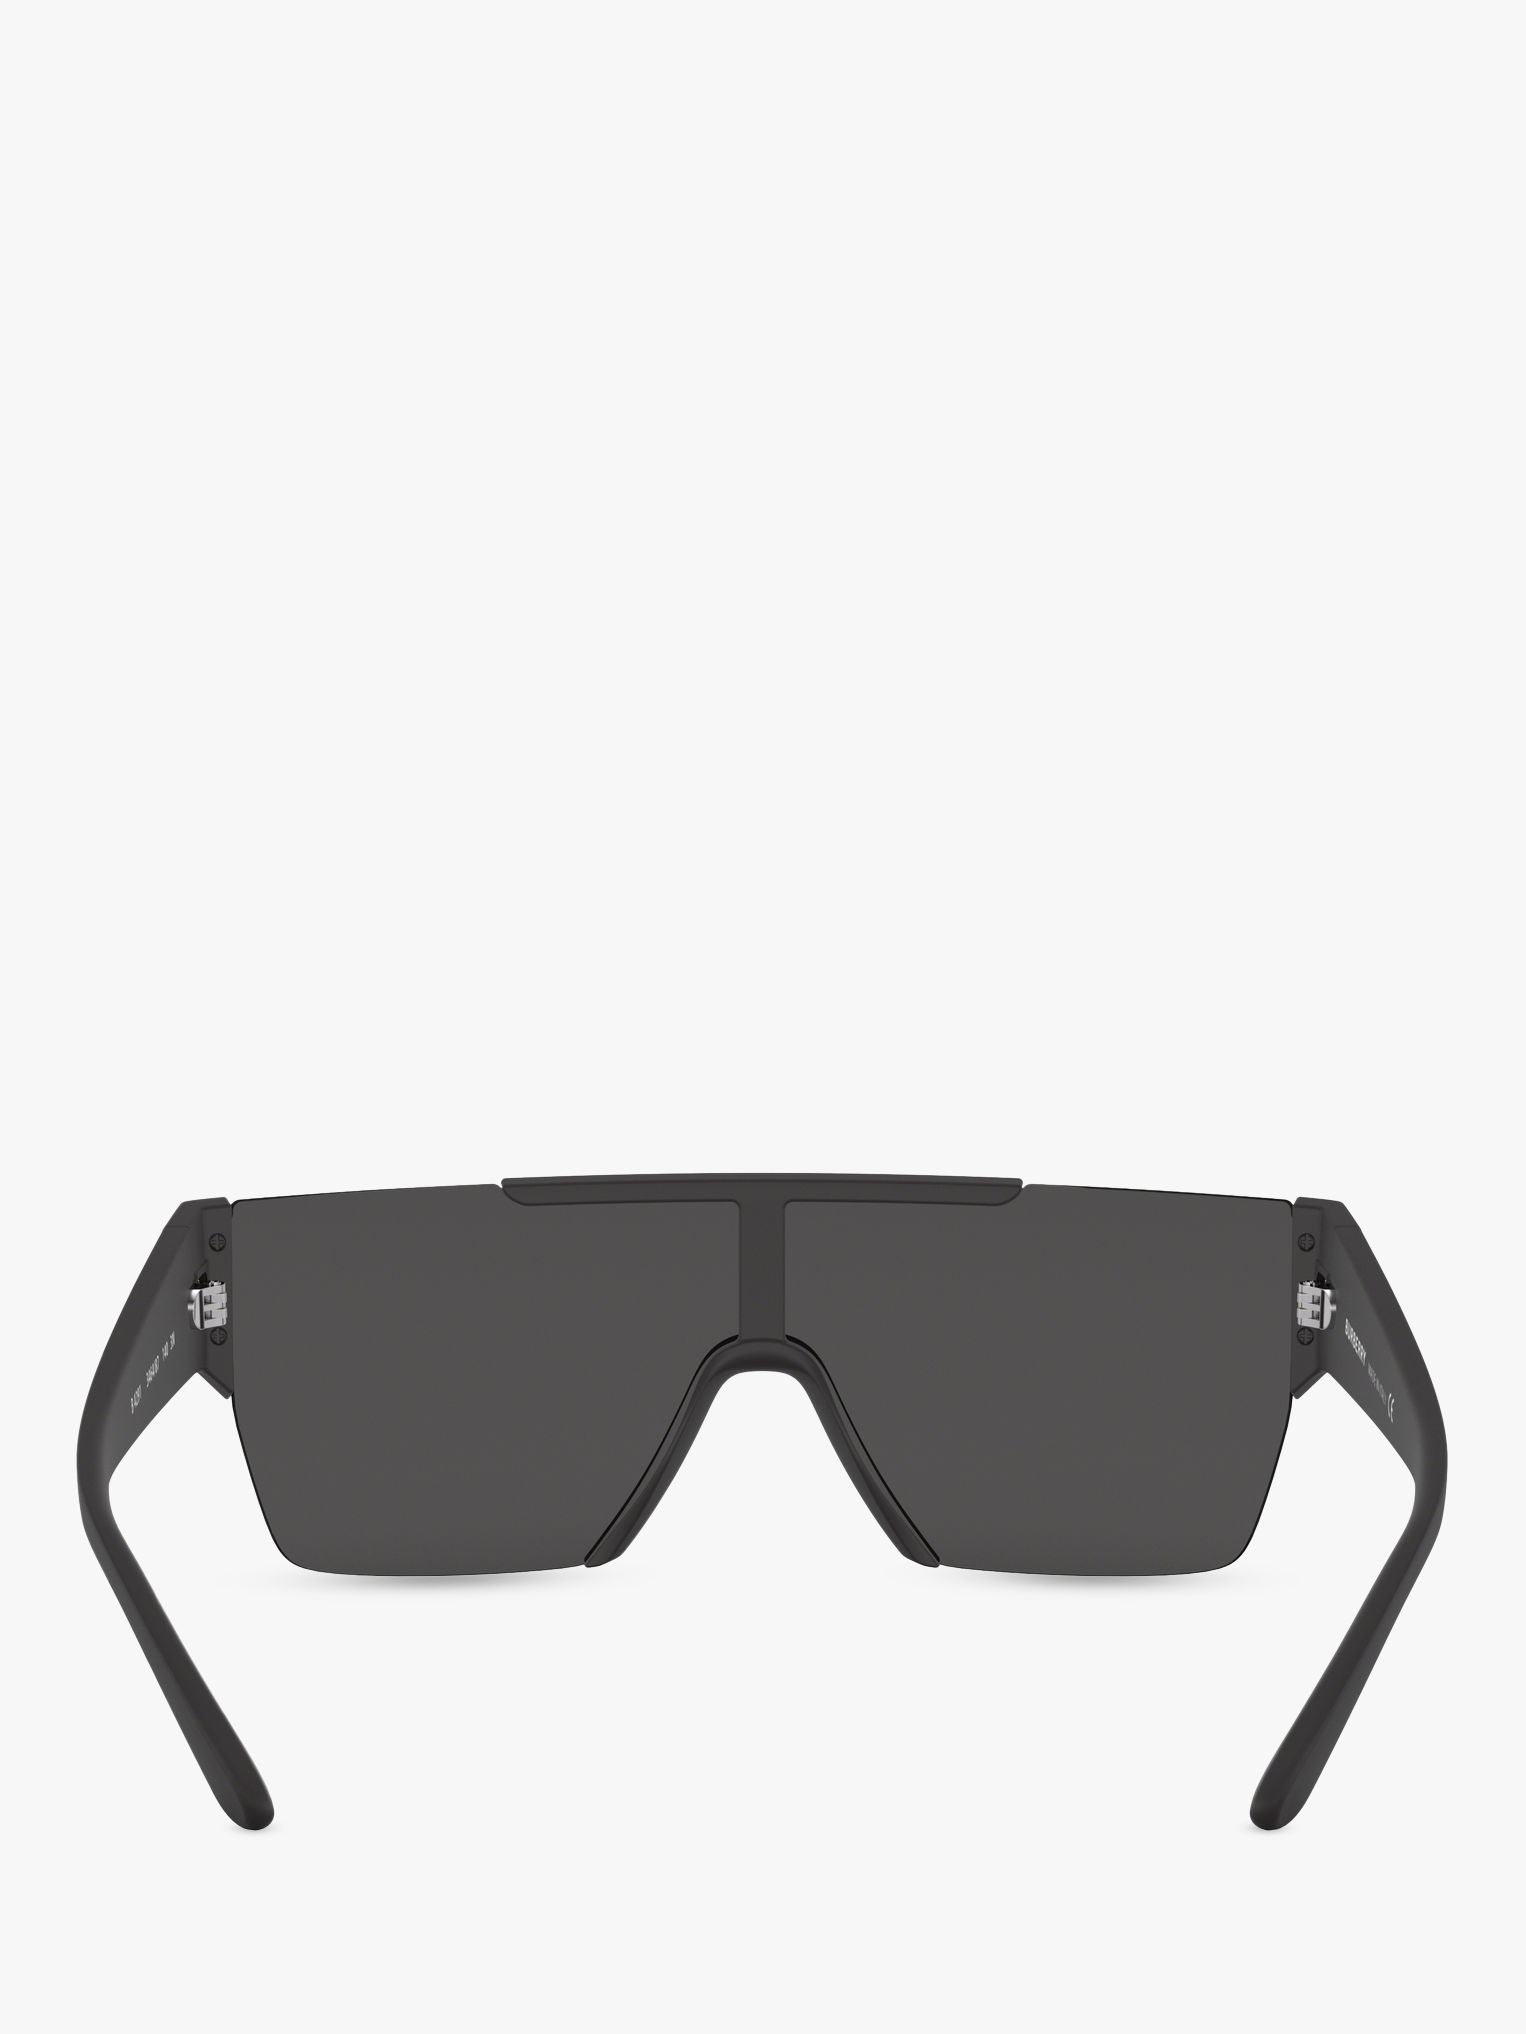 Burberry BE4291 Men's Rectangular Sunglasses, Black